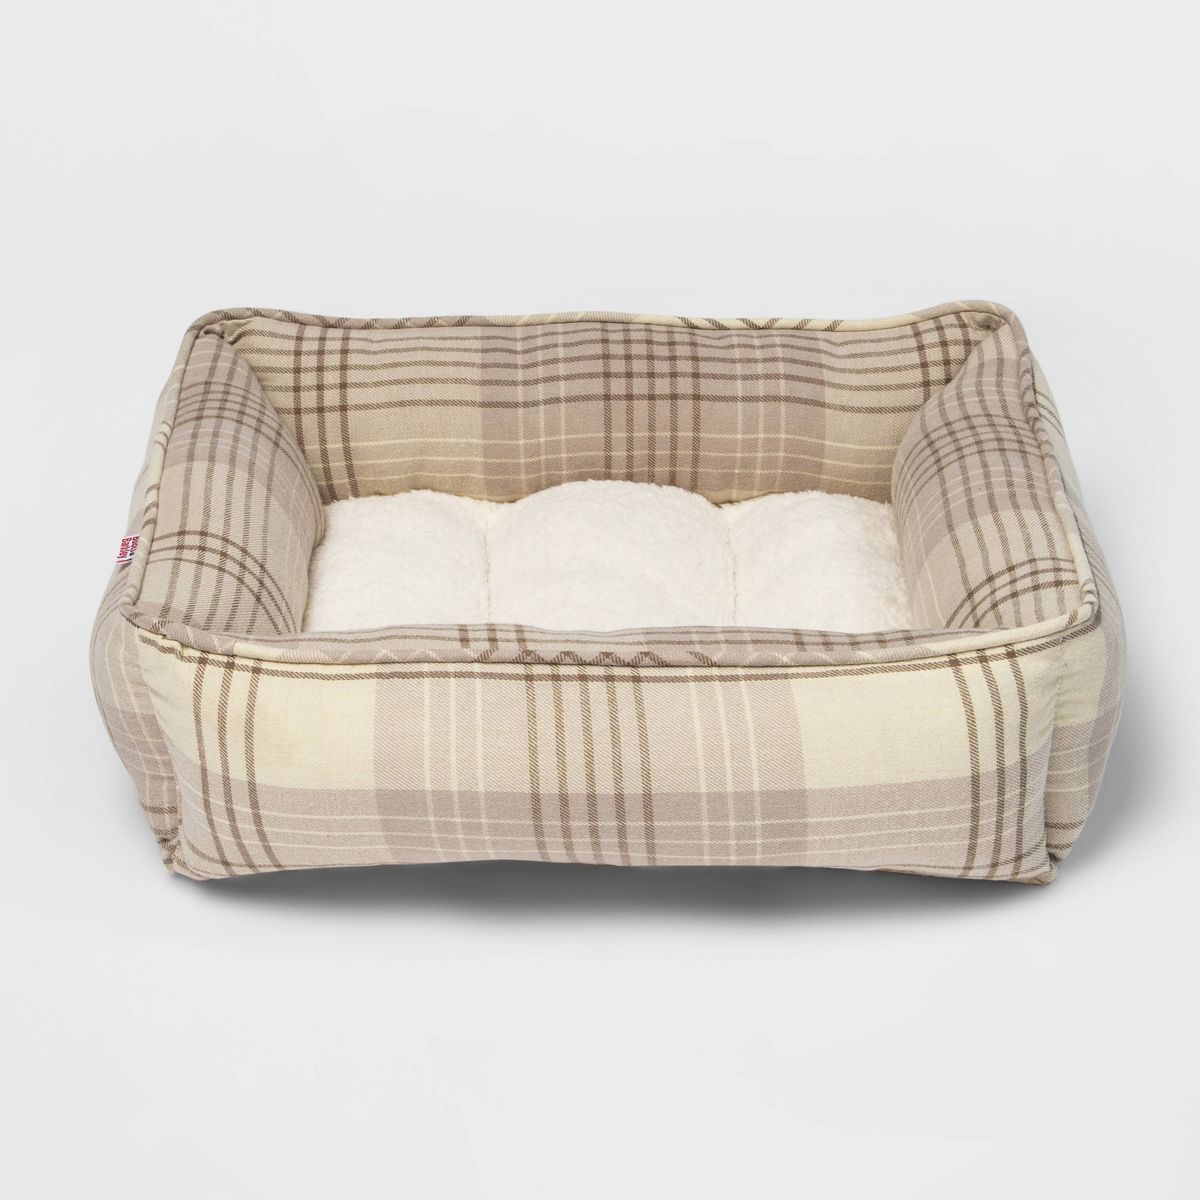 Orthopedic Plaid Flannel Cuddler Dog Bed - Cream/Brown - Boots & Barkley™ | Target